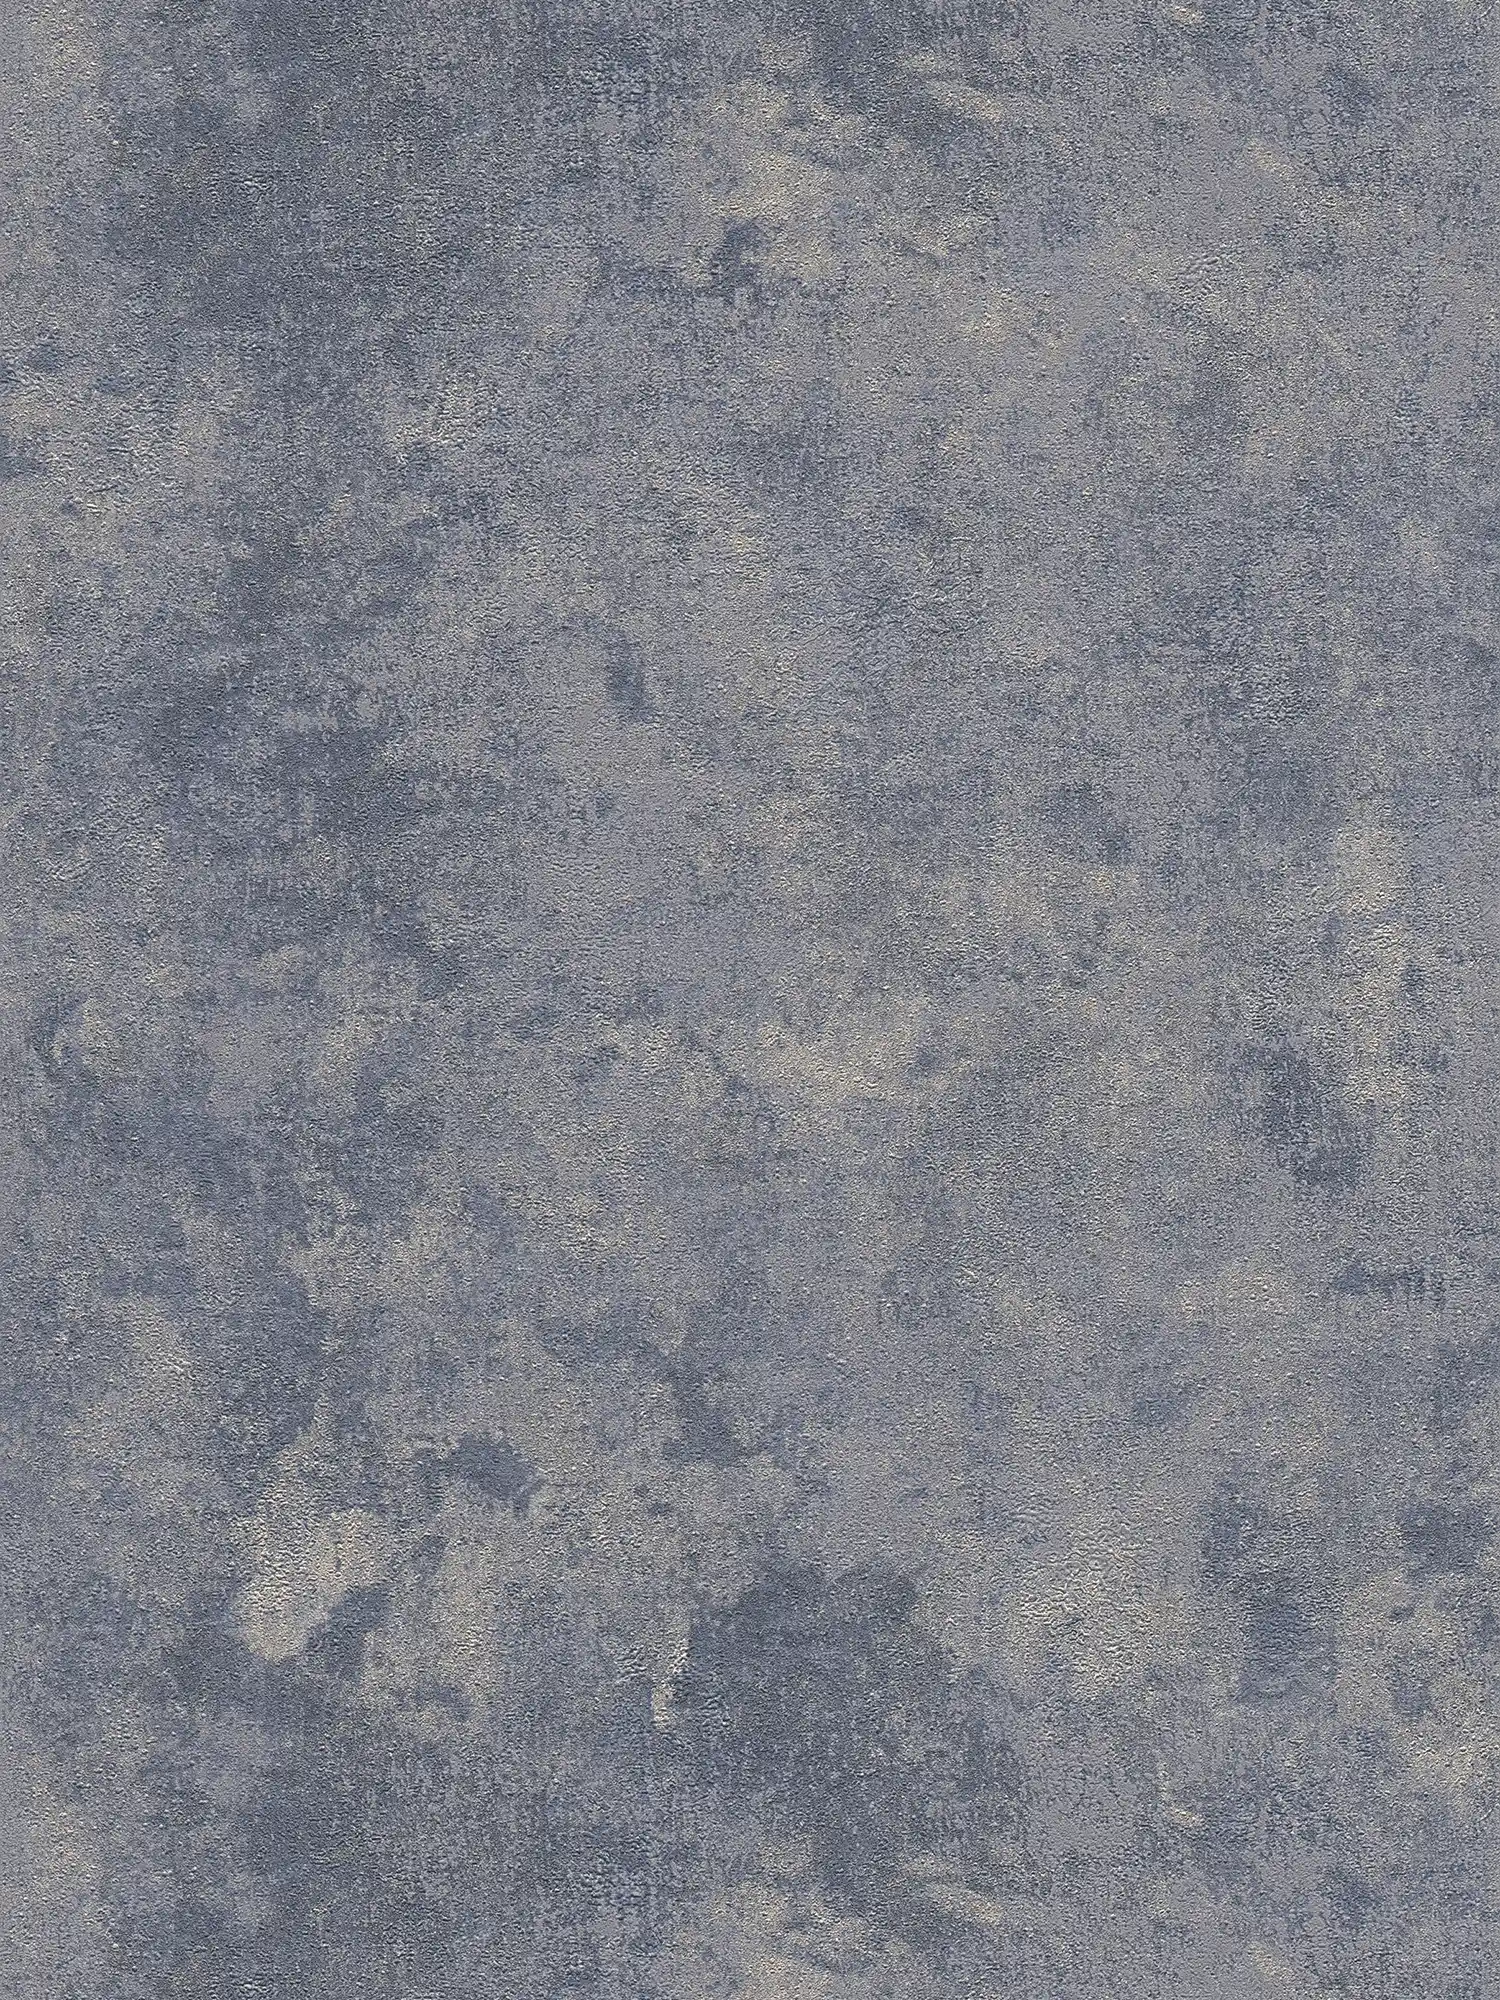 Tapete raue Struktur & Glanz-Effekt – Blau, Silber, Grau
